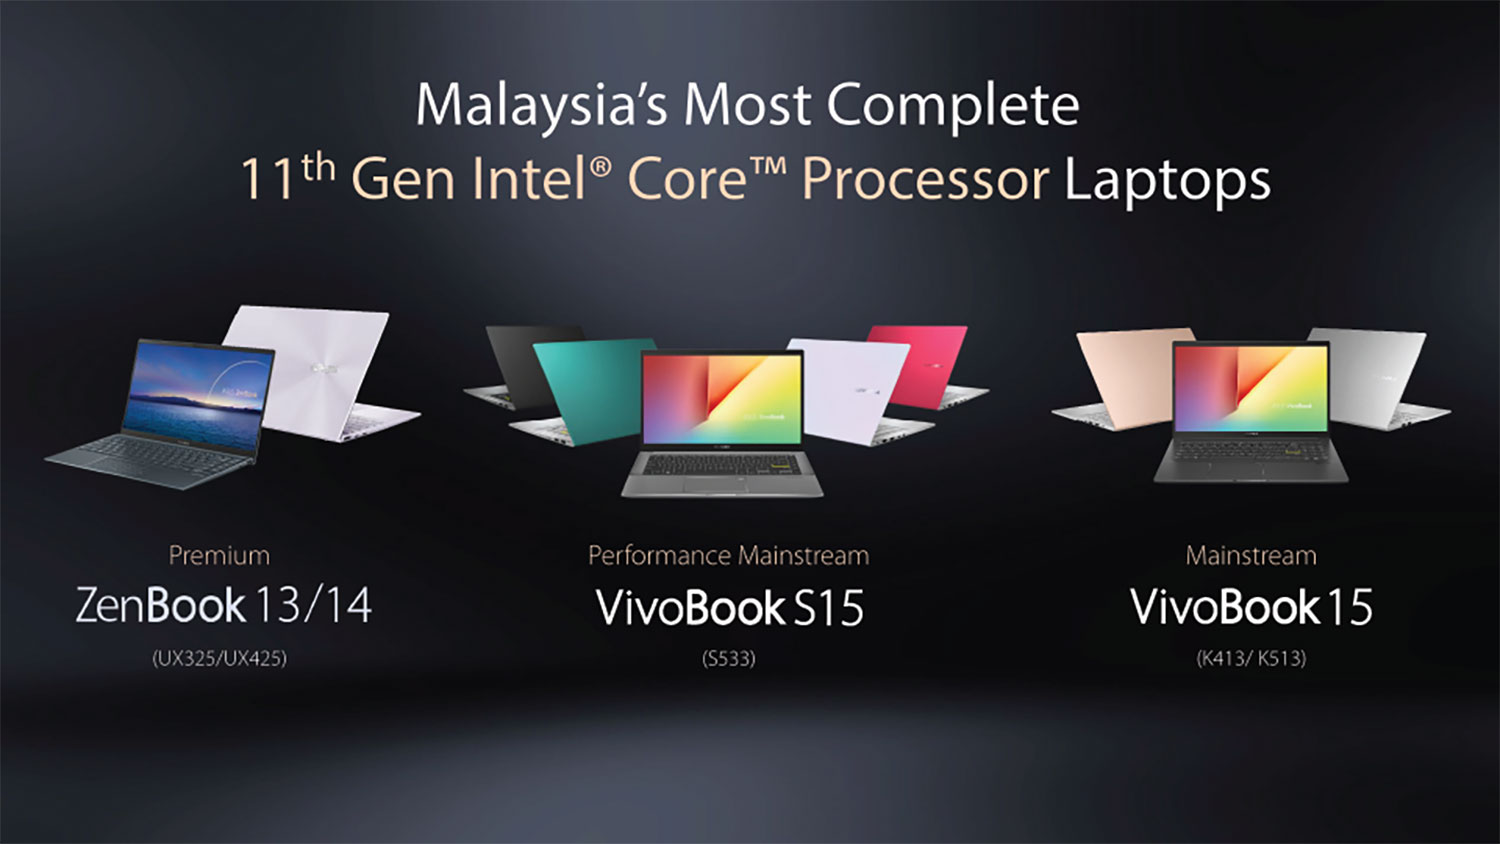 ASUS 11th Gen Intel Core Processor Laptops